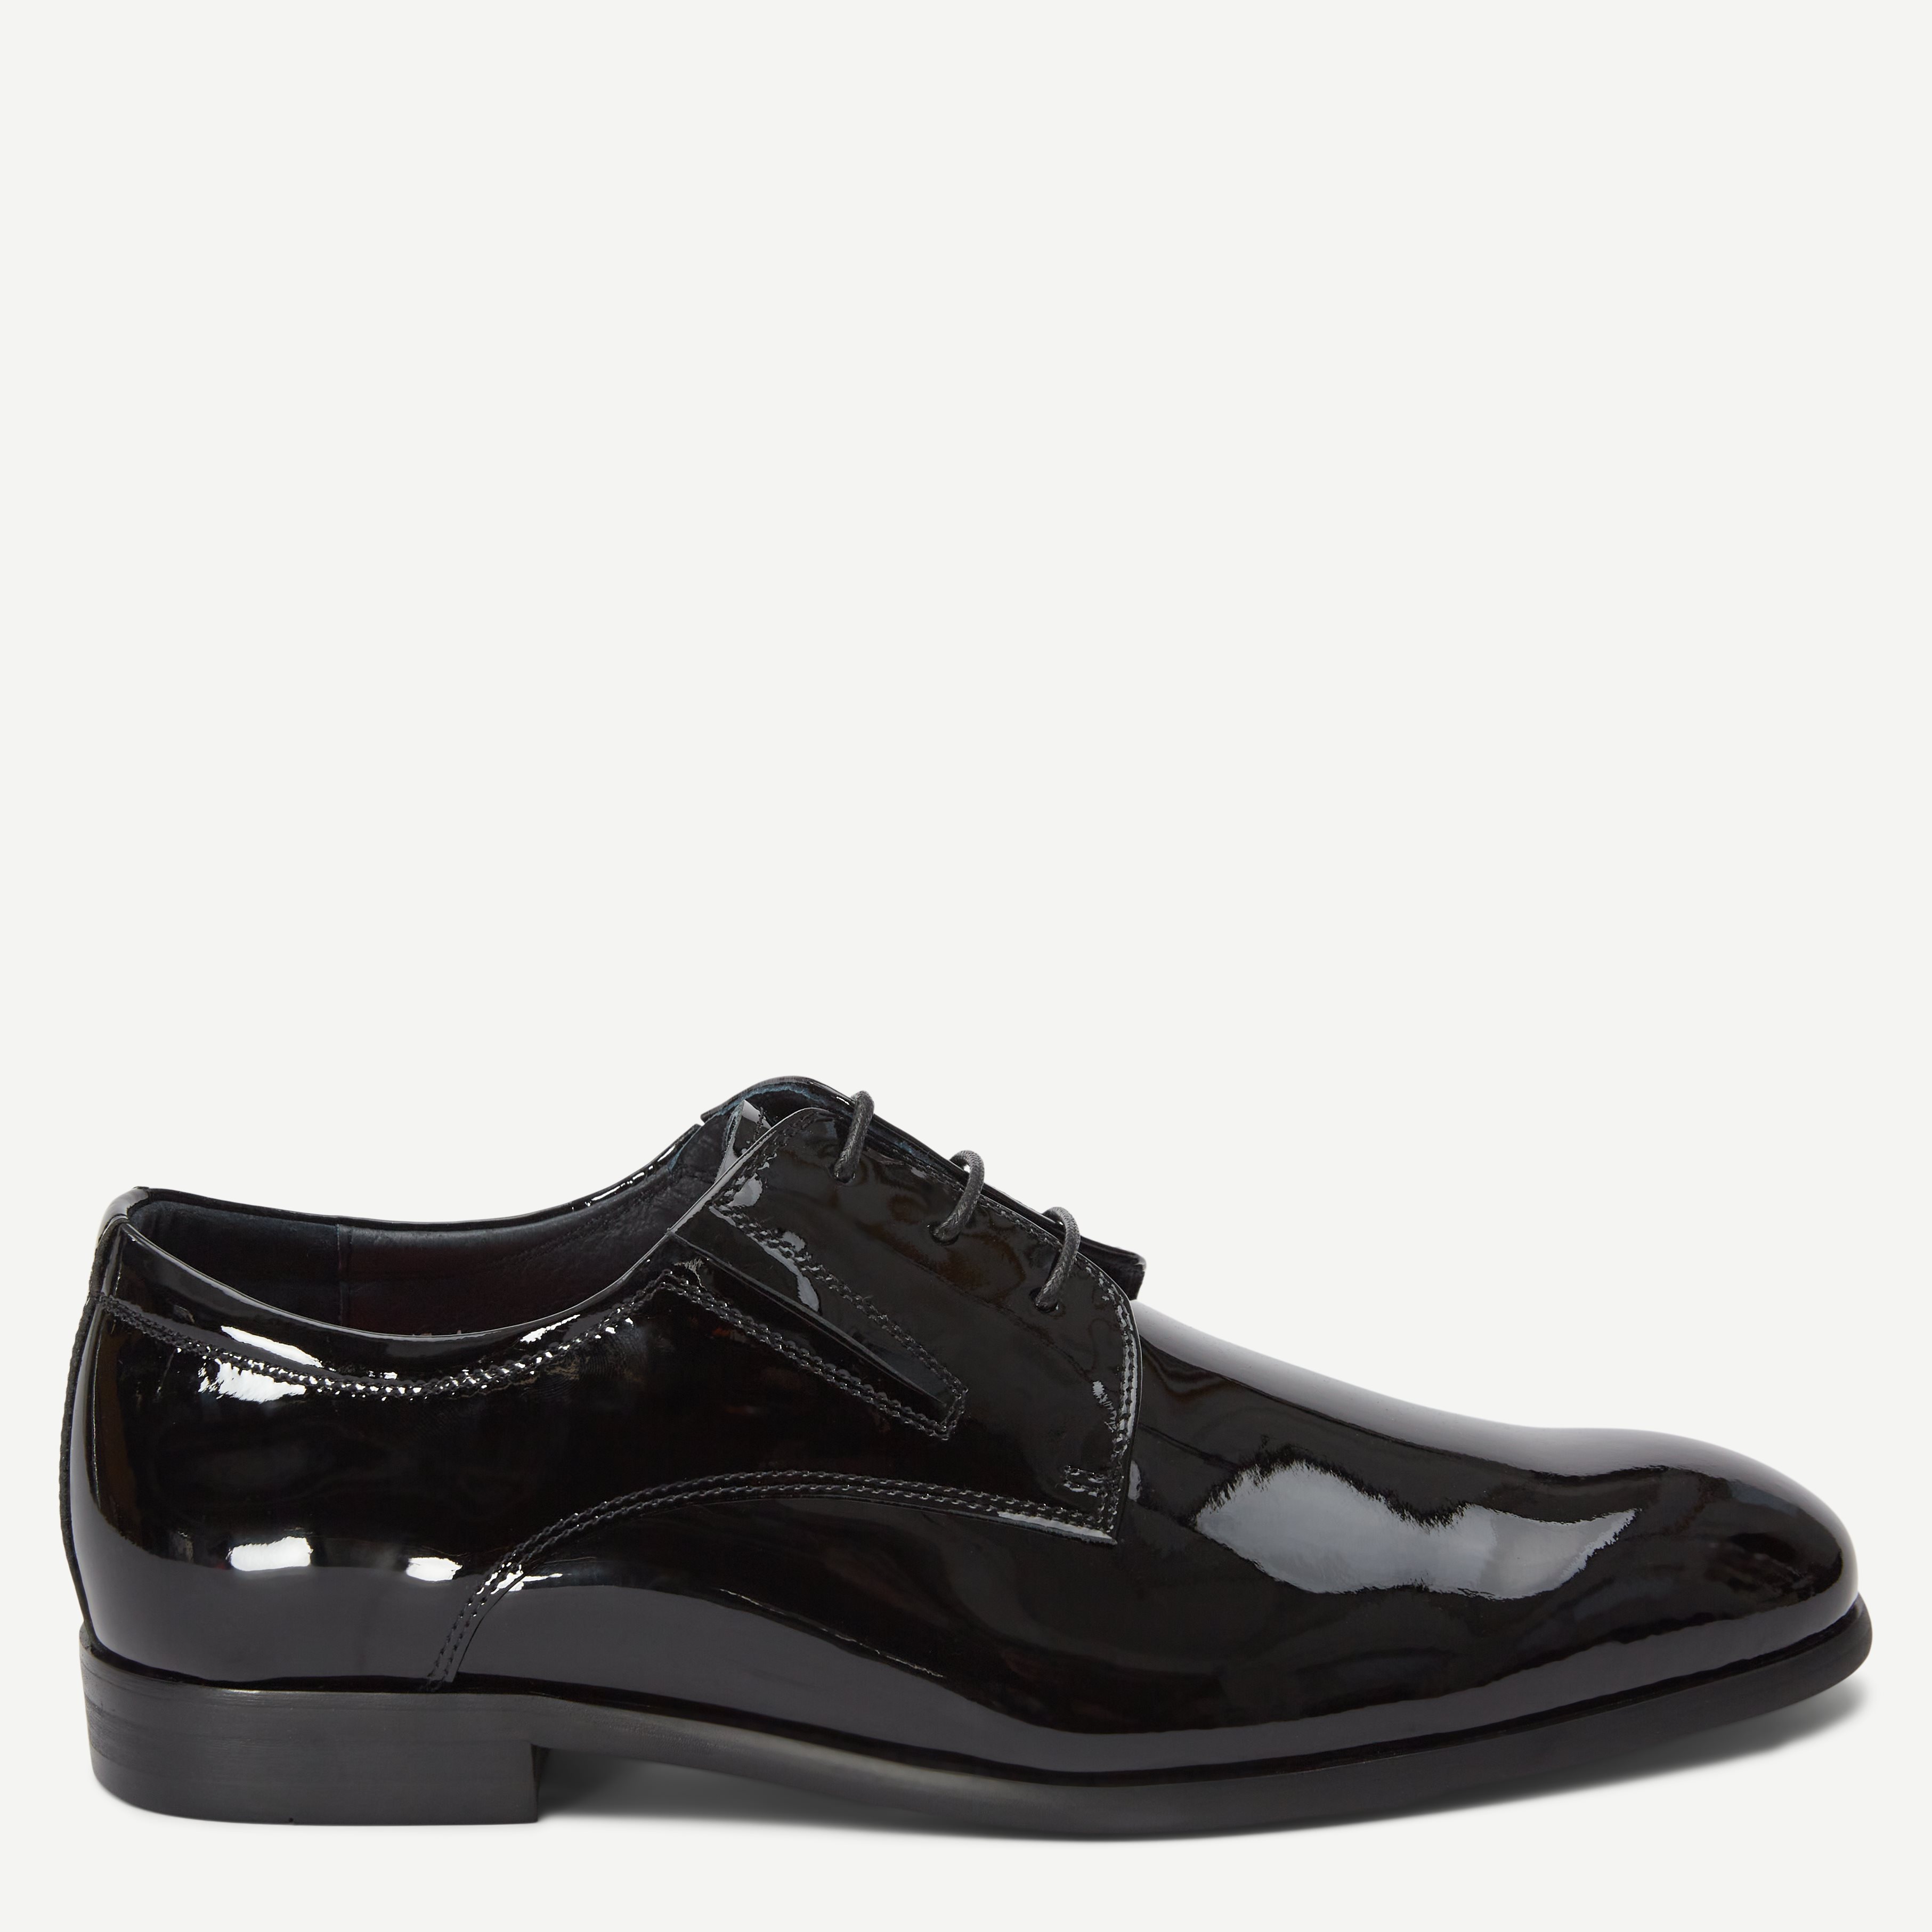 Ahler Shoes TGA 1800 Black